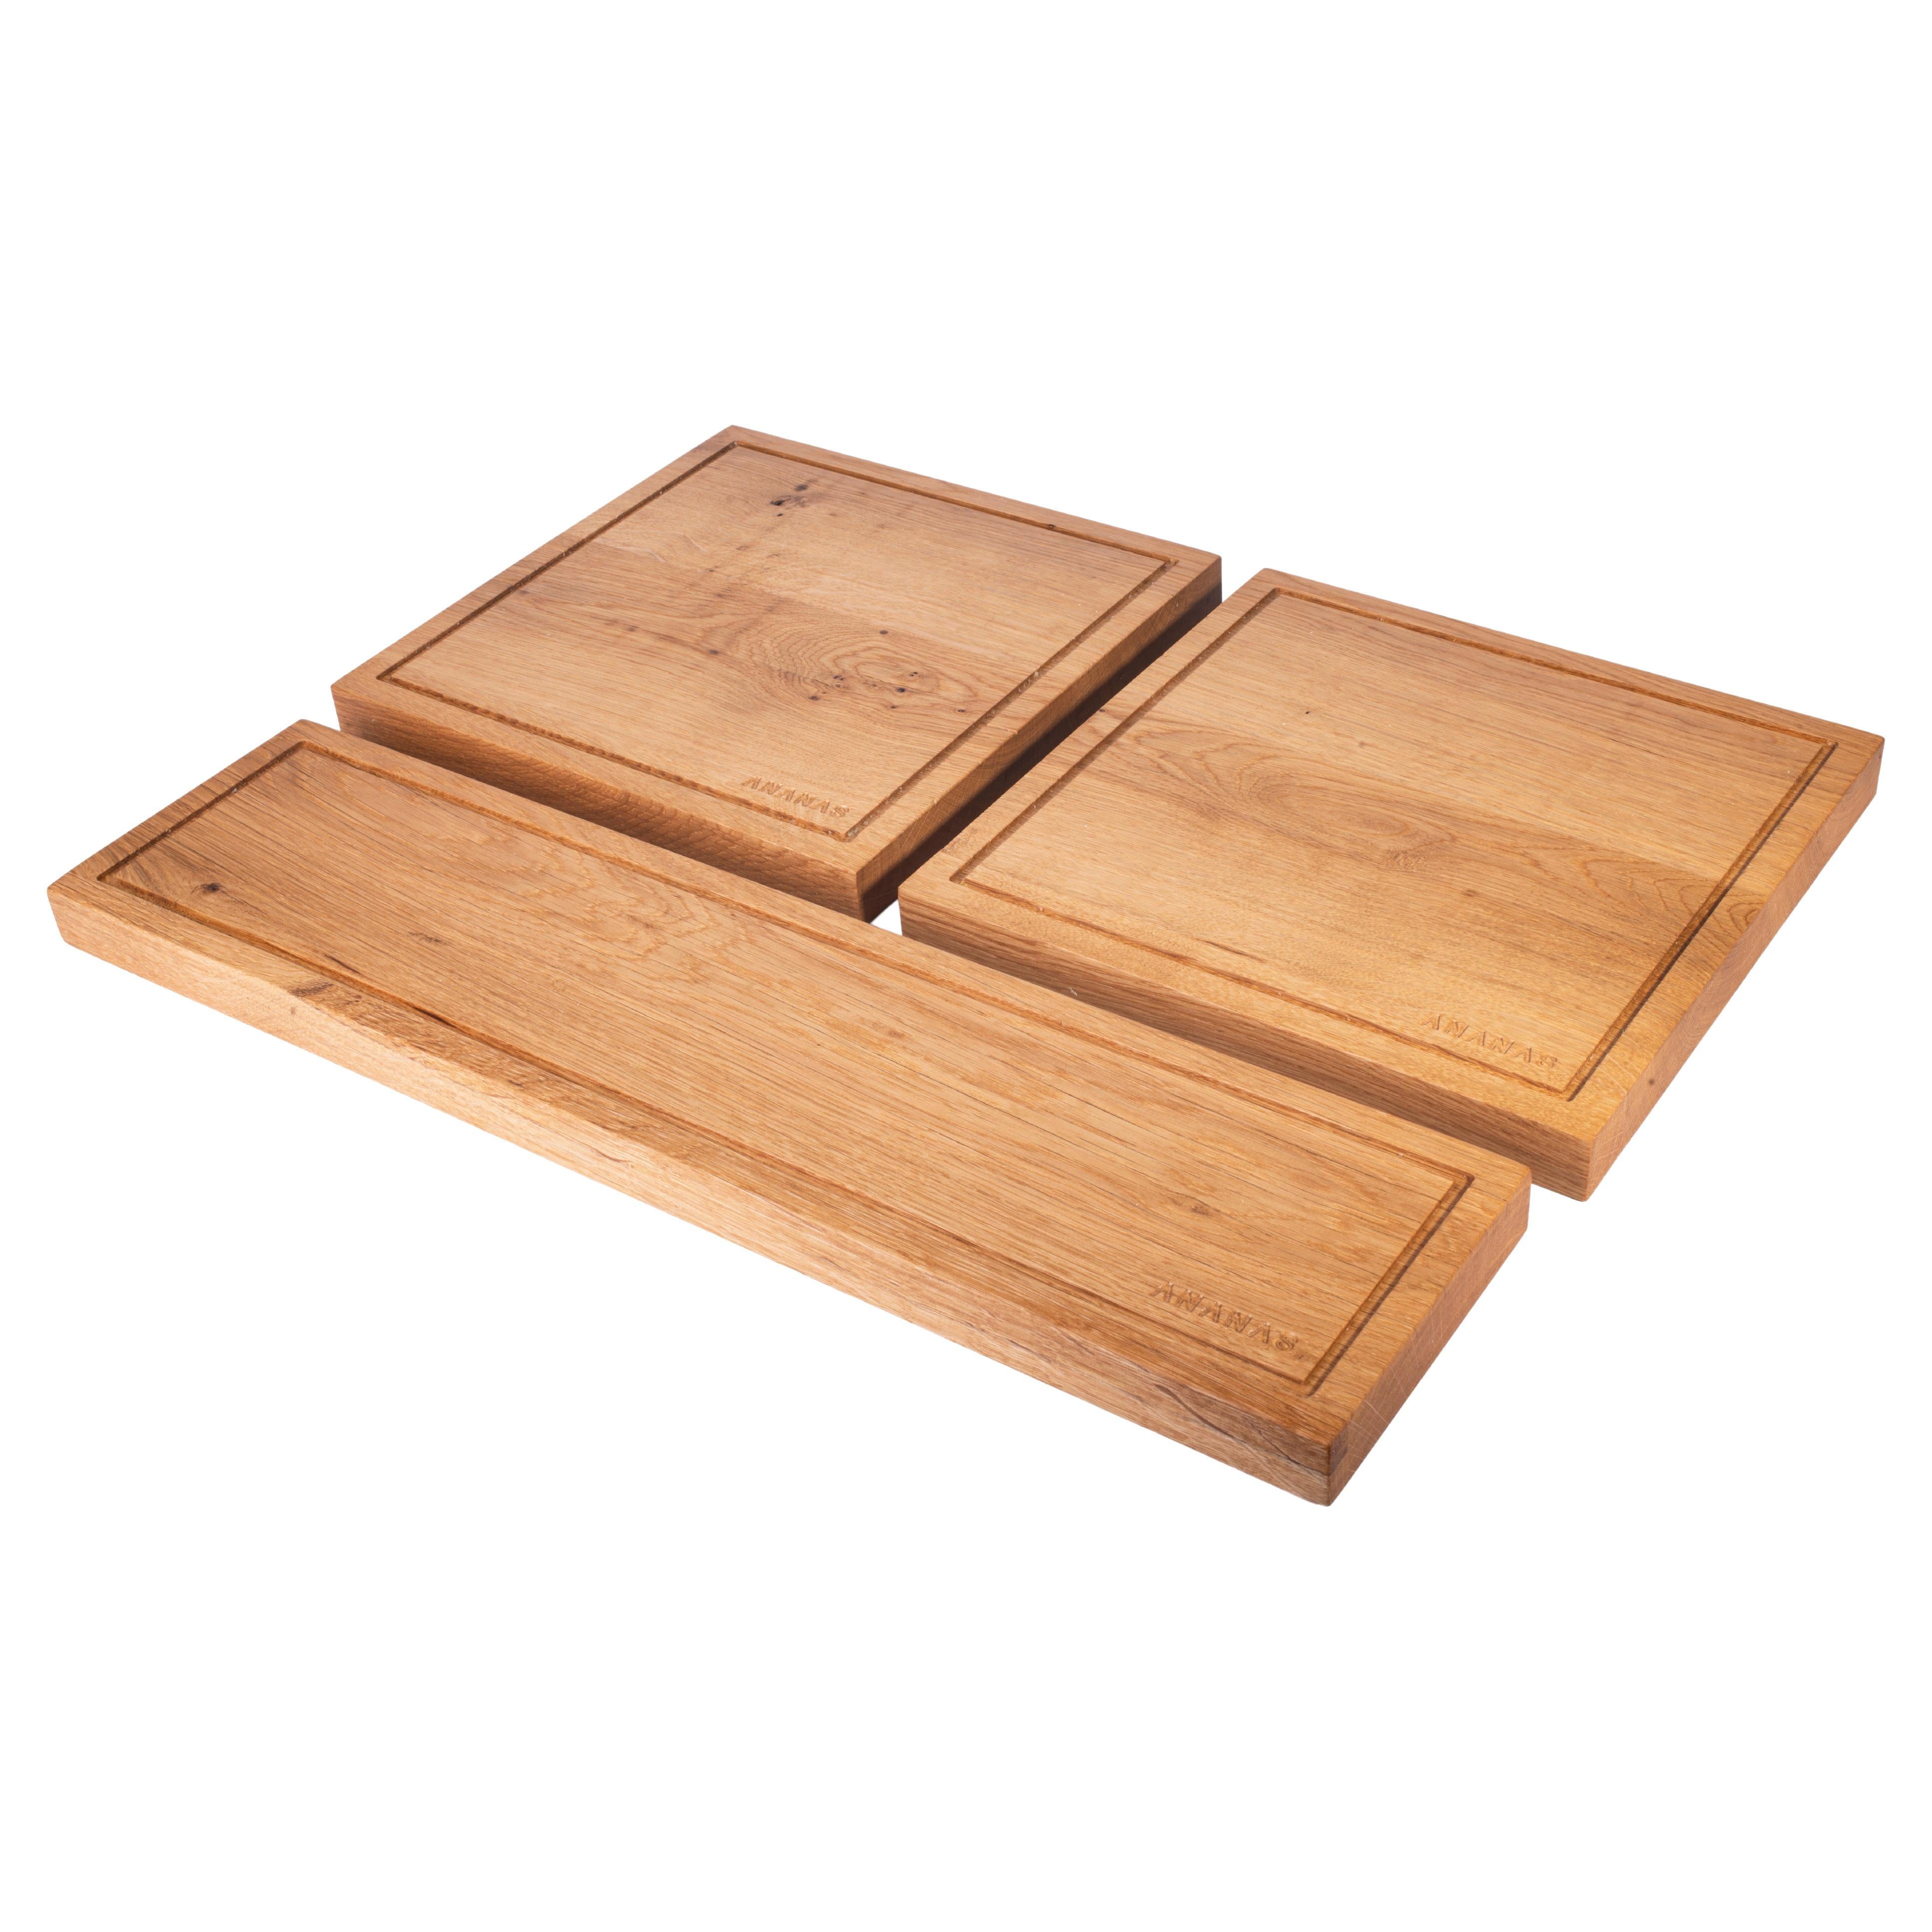 Border, Handmade Oak Wood Serving and Cutting Board Set of Three